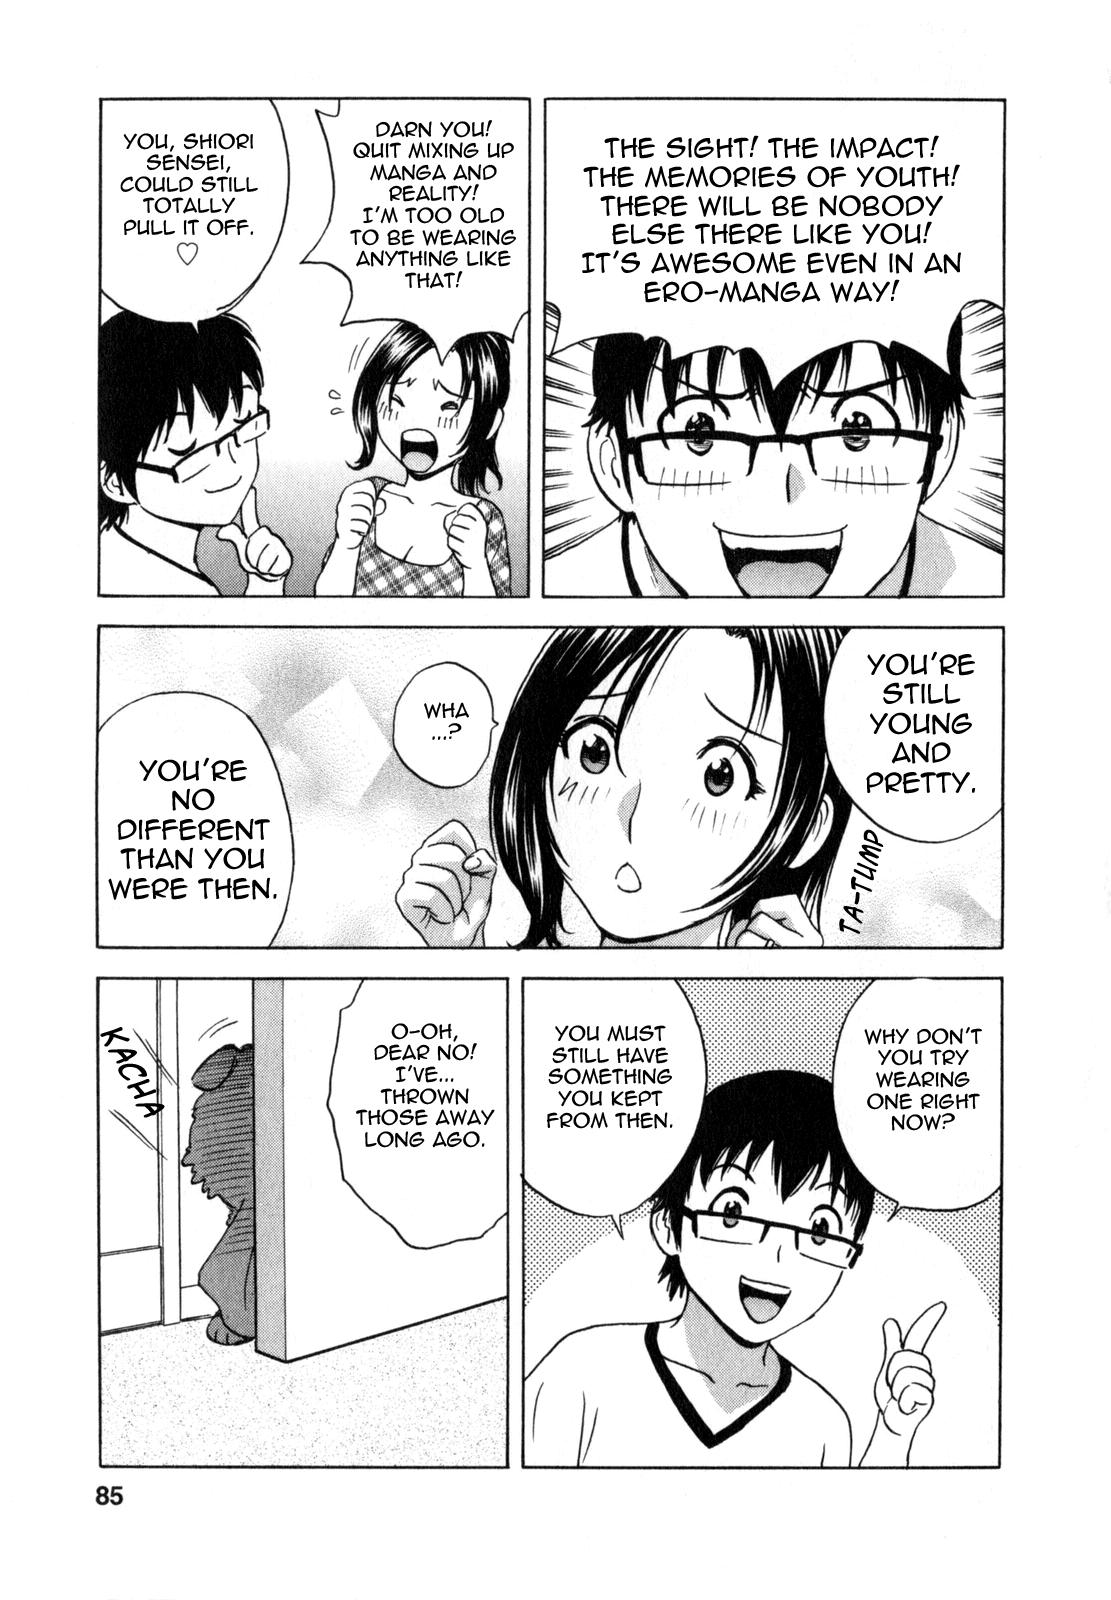 [Hidemaru] Life with Married Women Just Like a Manga 1 - Ch. 1-5 [English] {Tadanohito} 89